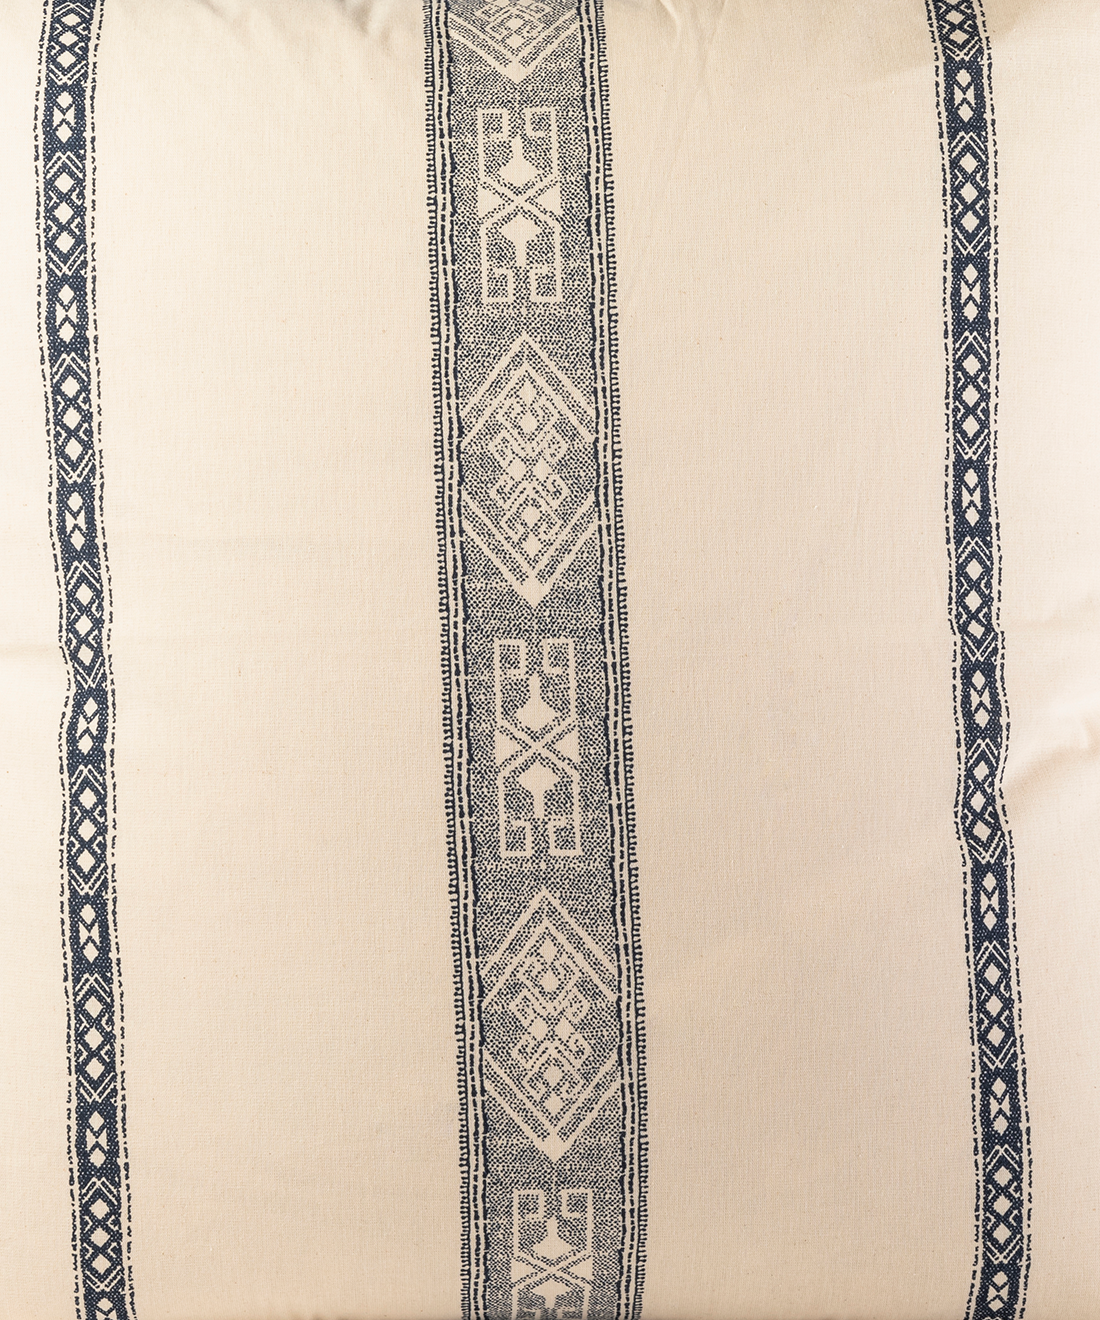 Whiteman & Mellor's Casablanca Stripe in Indigo, Fabric by the Meter